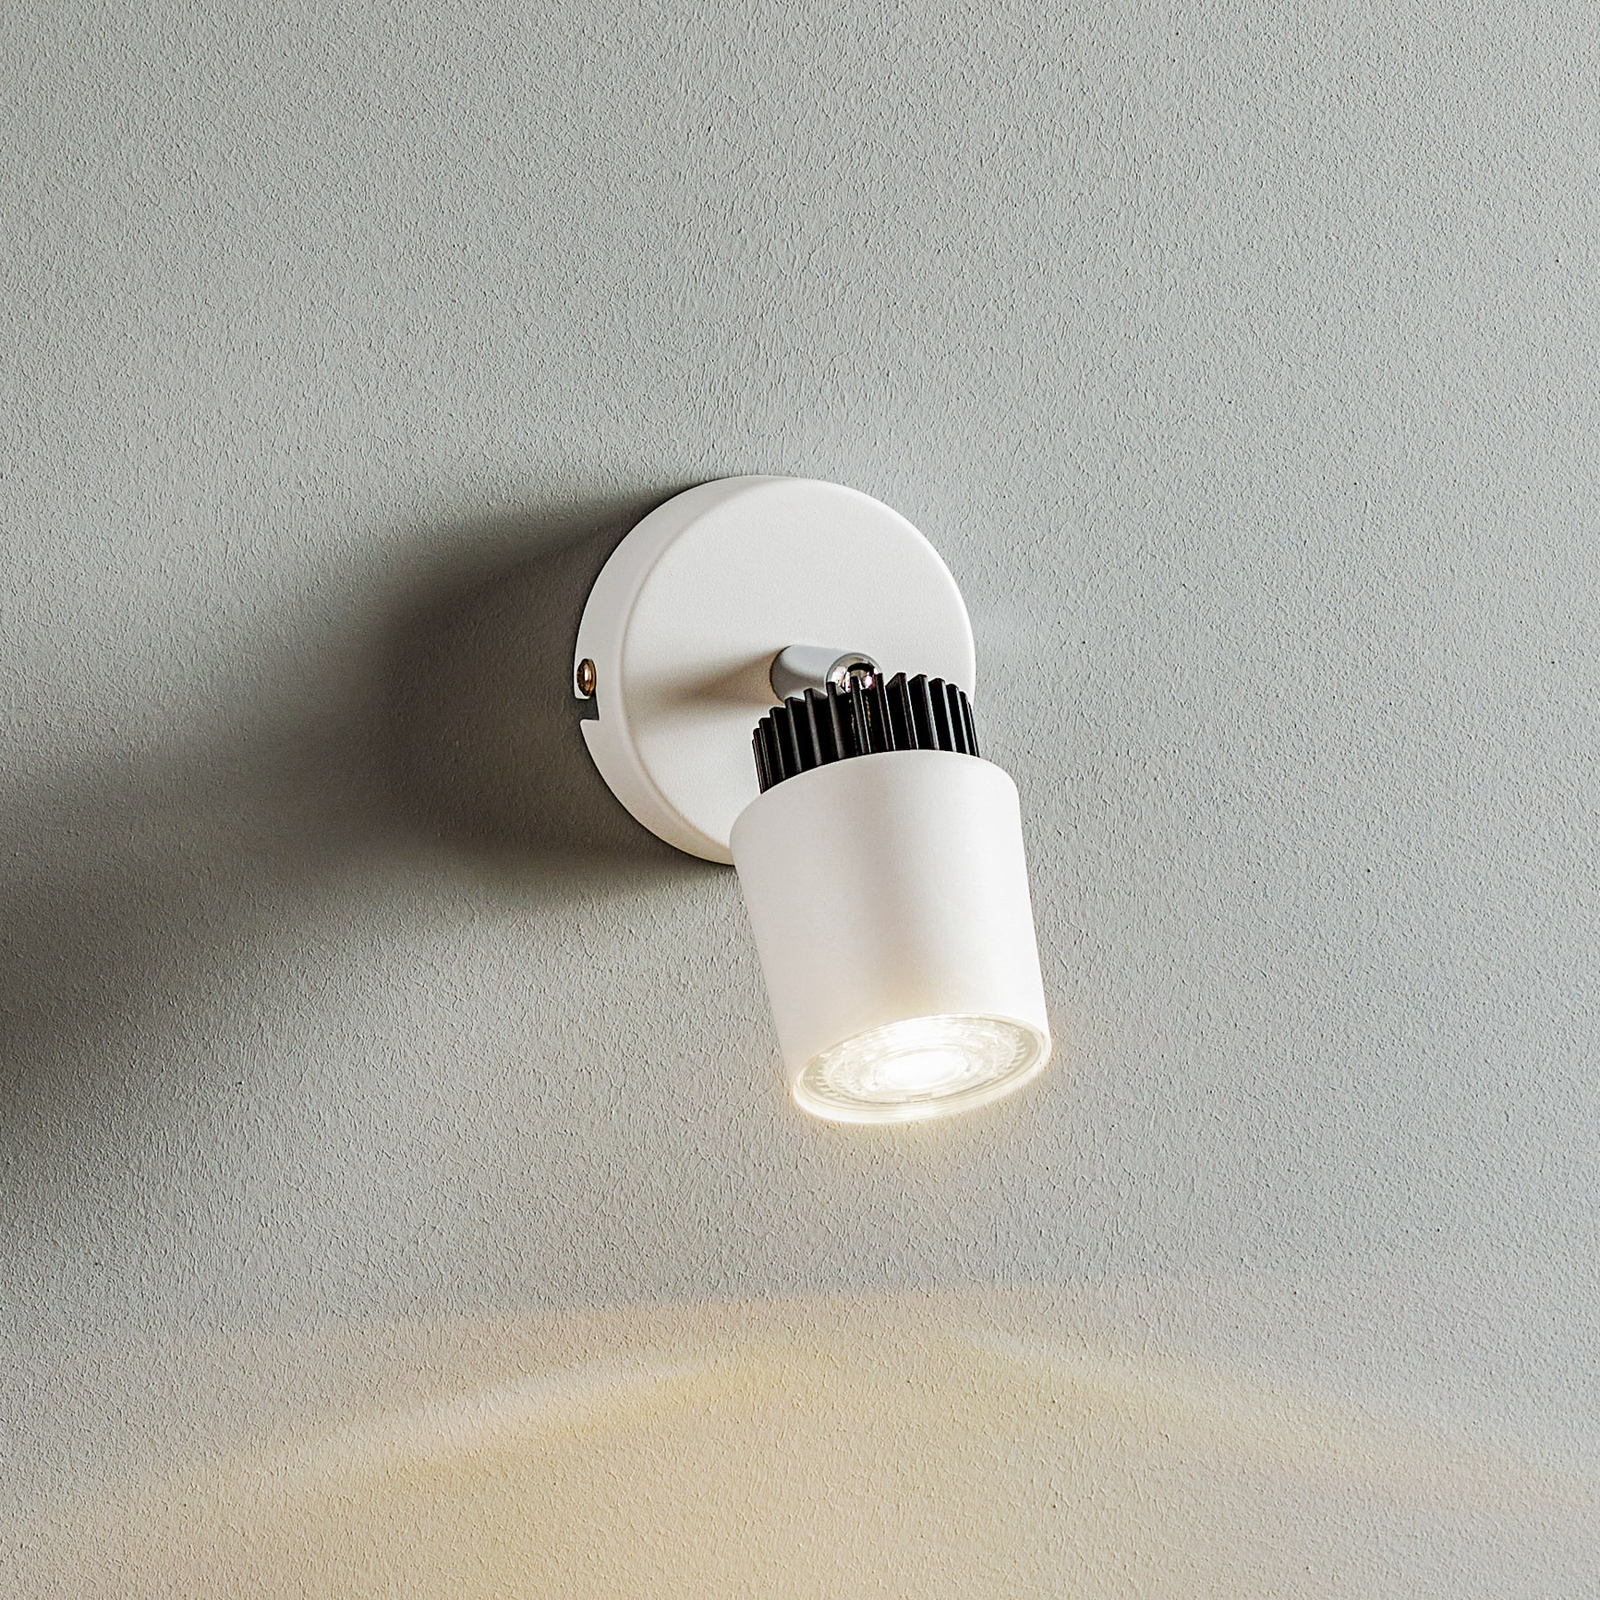 Tec wall spotlight in white, one-bulb